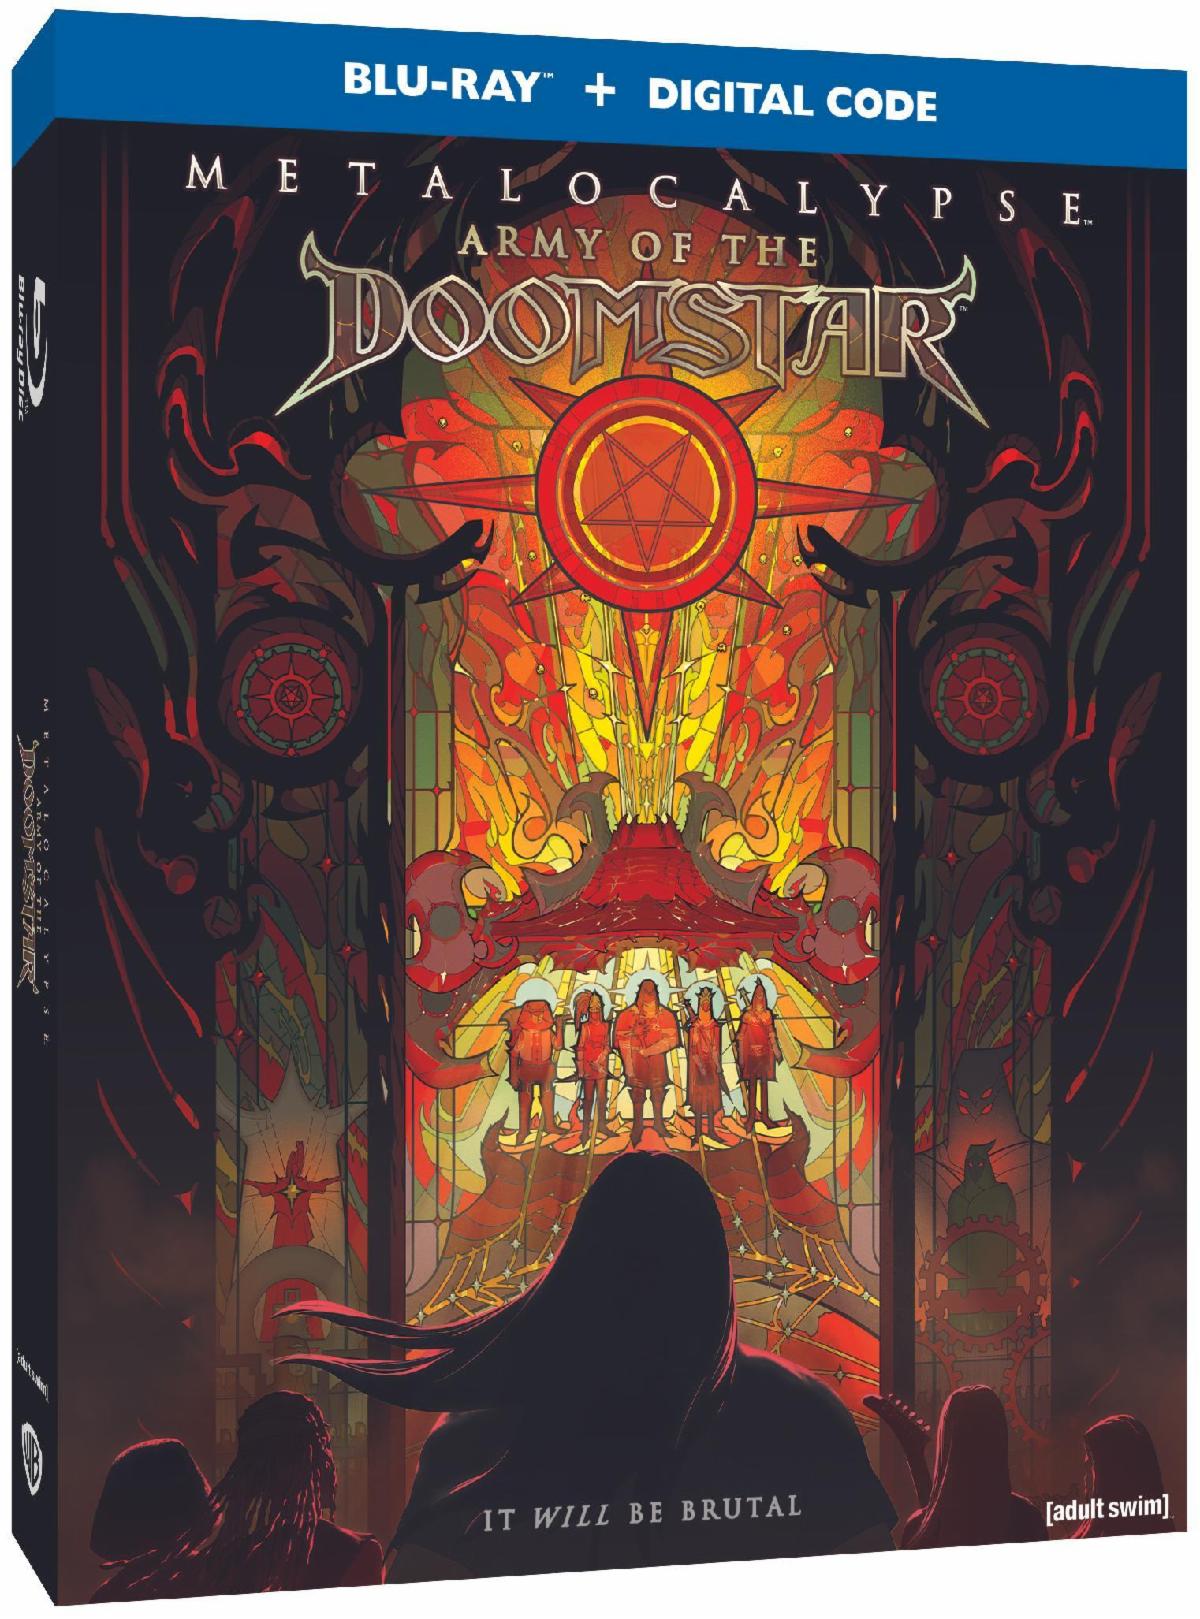 DETHKLOK Dethalbum IV and METALOCALYPSE: Army of the Doomstar Blu-ray Drop Tomorrow